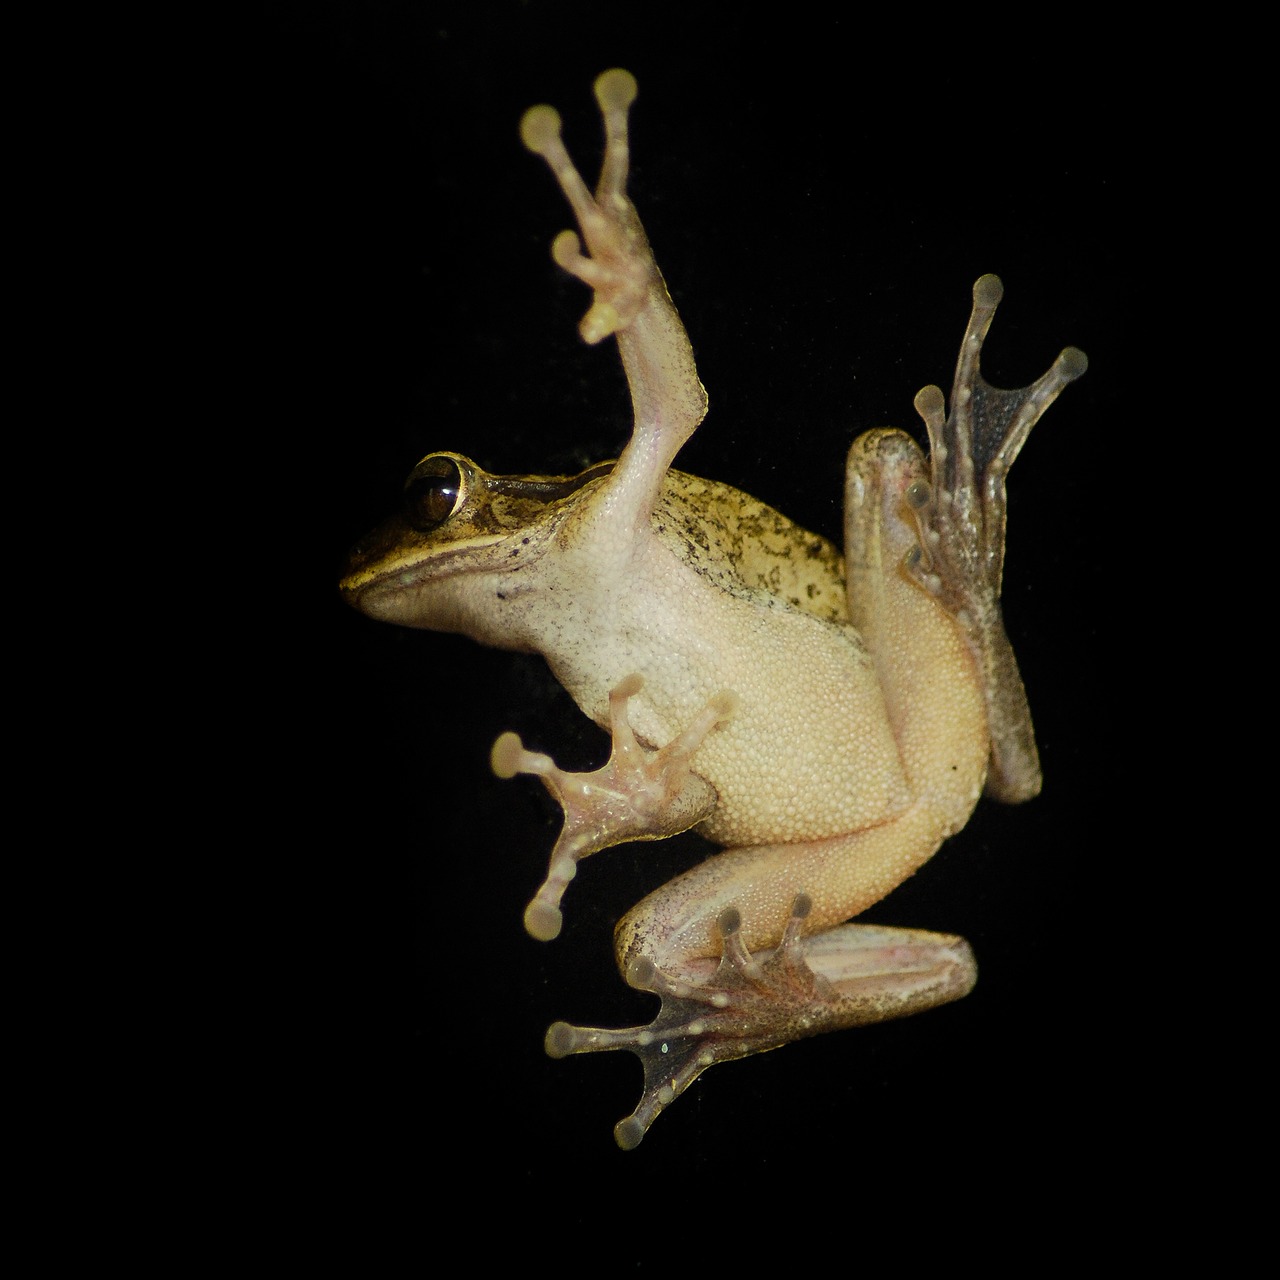 creature froggy close-up free photo